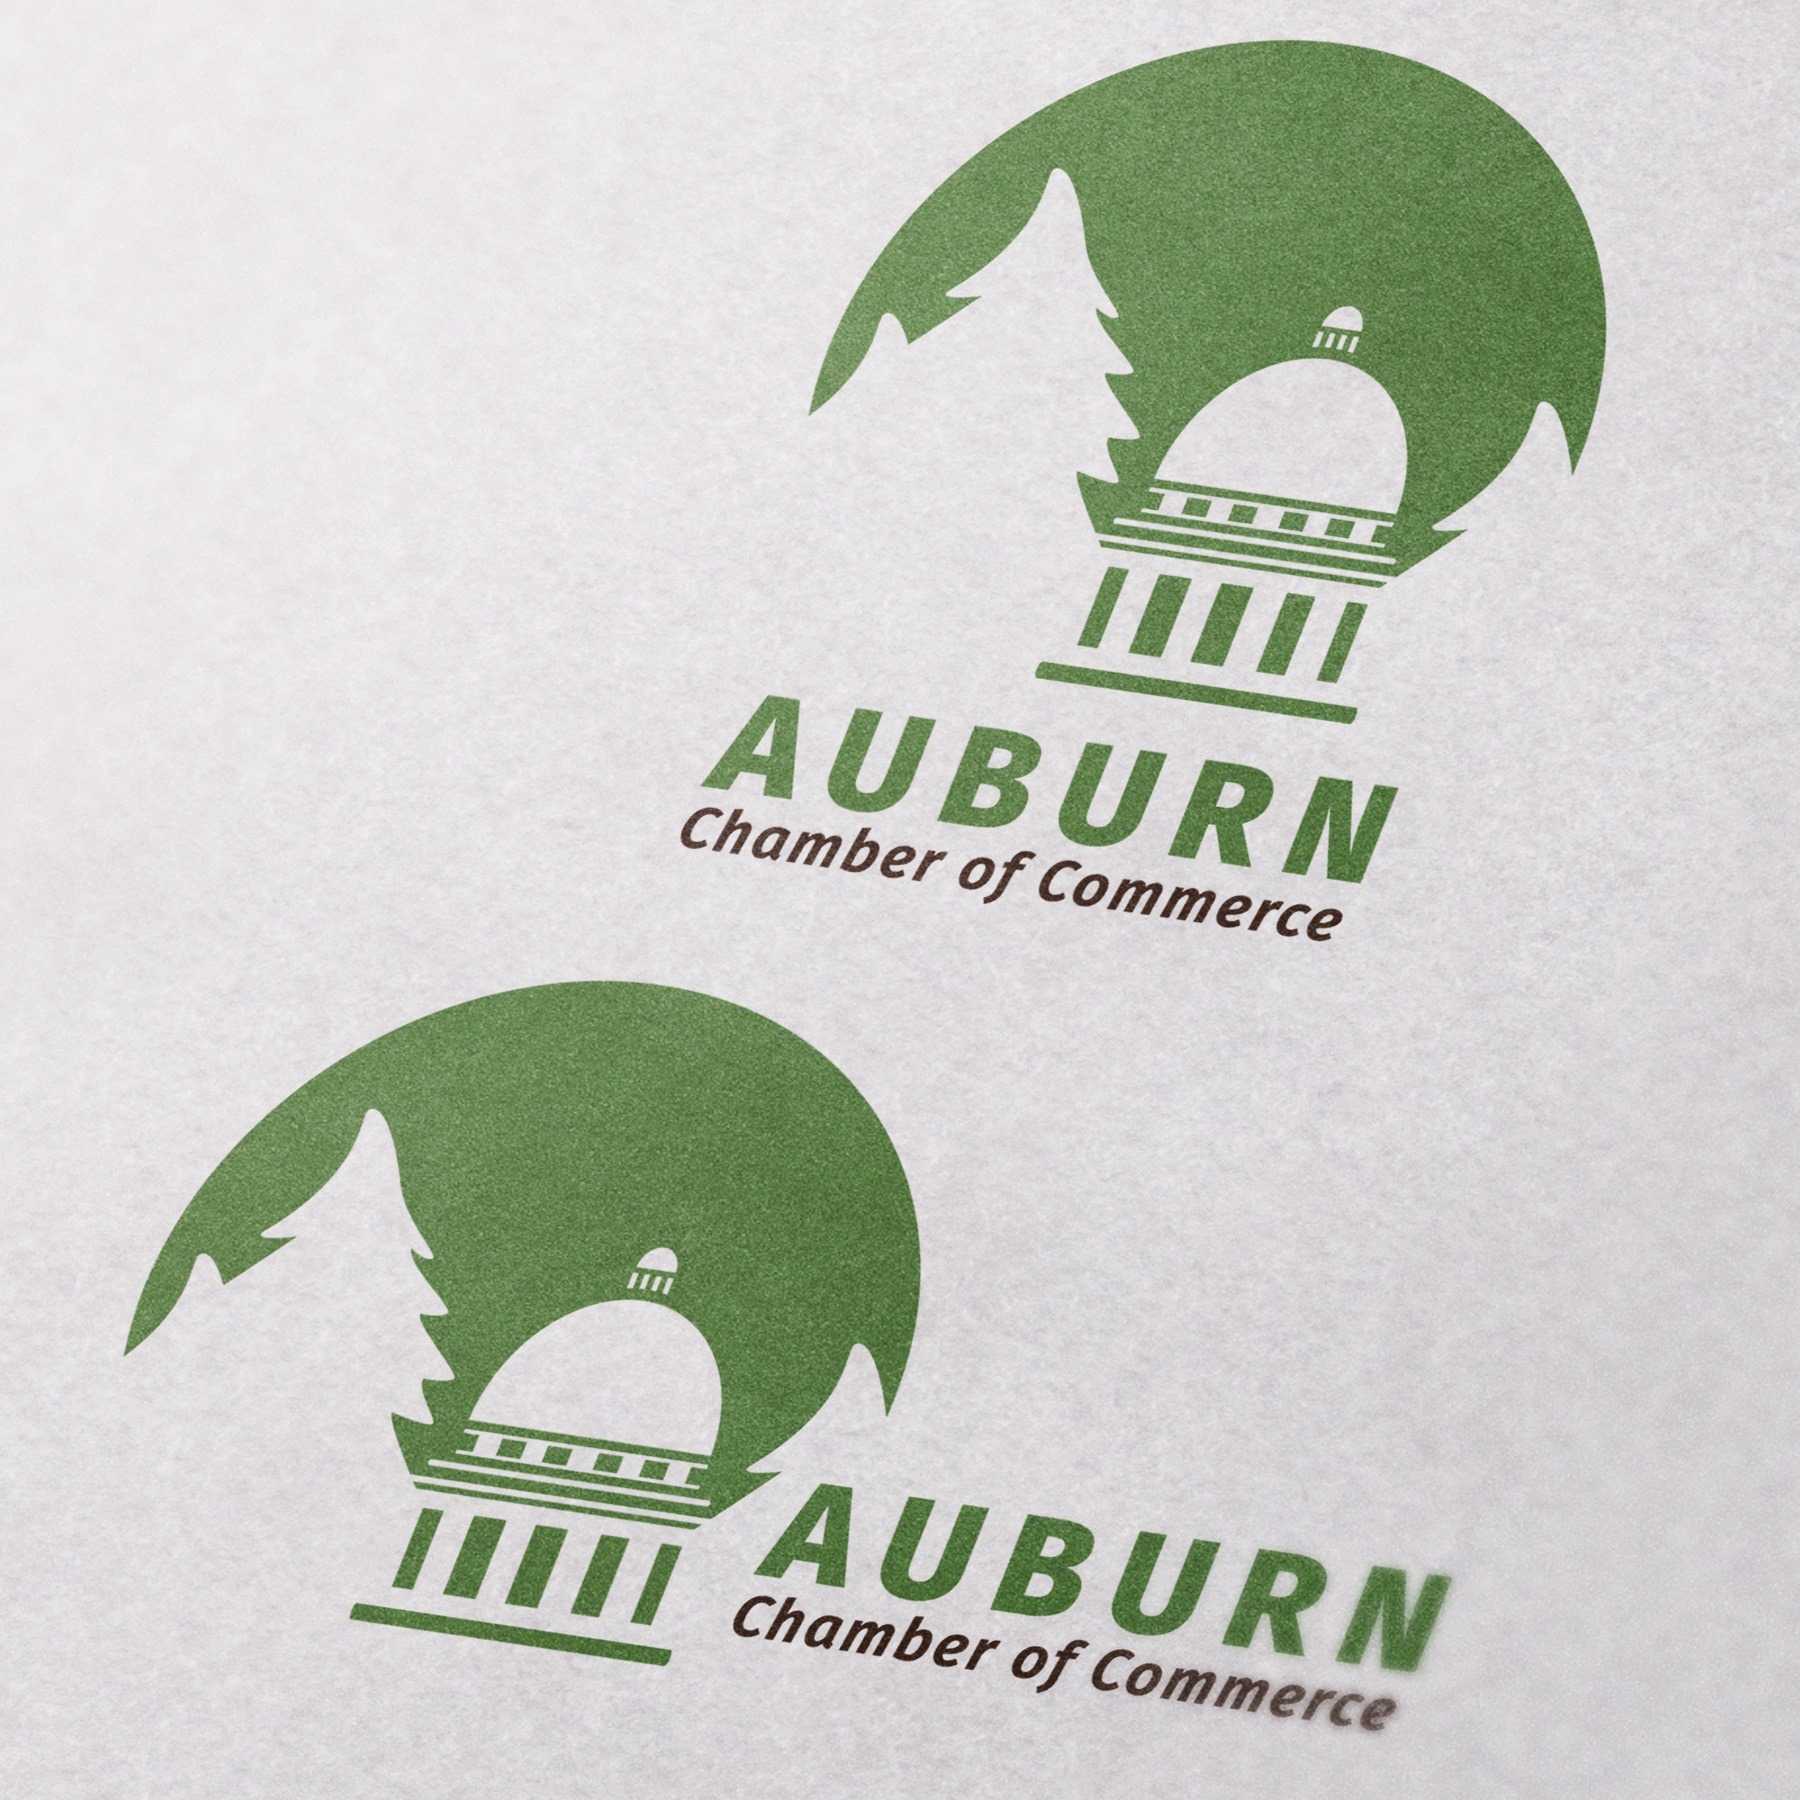 Auburn Chamber of Commerce Business Cards